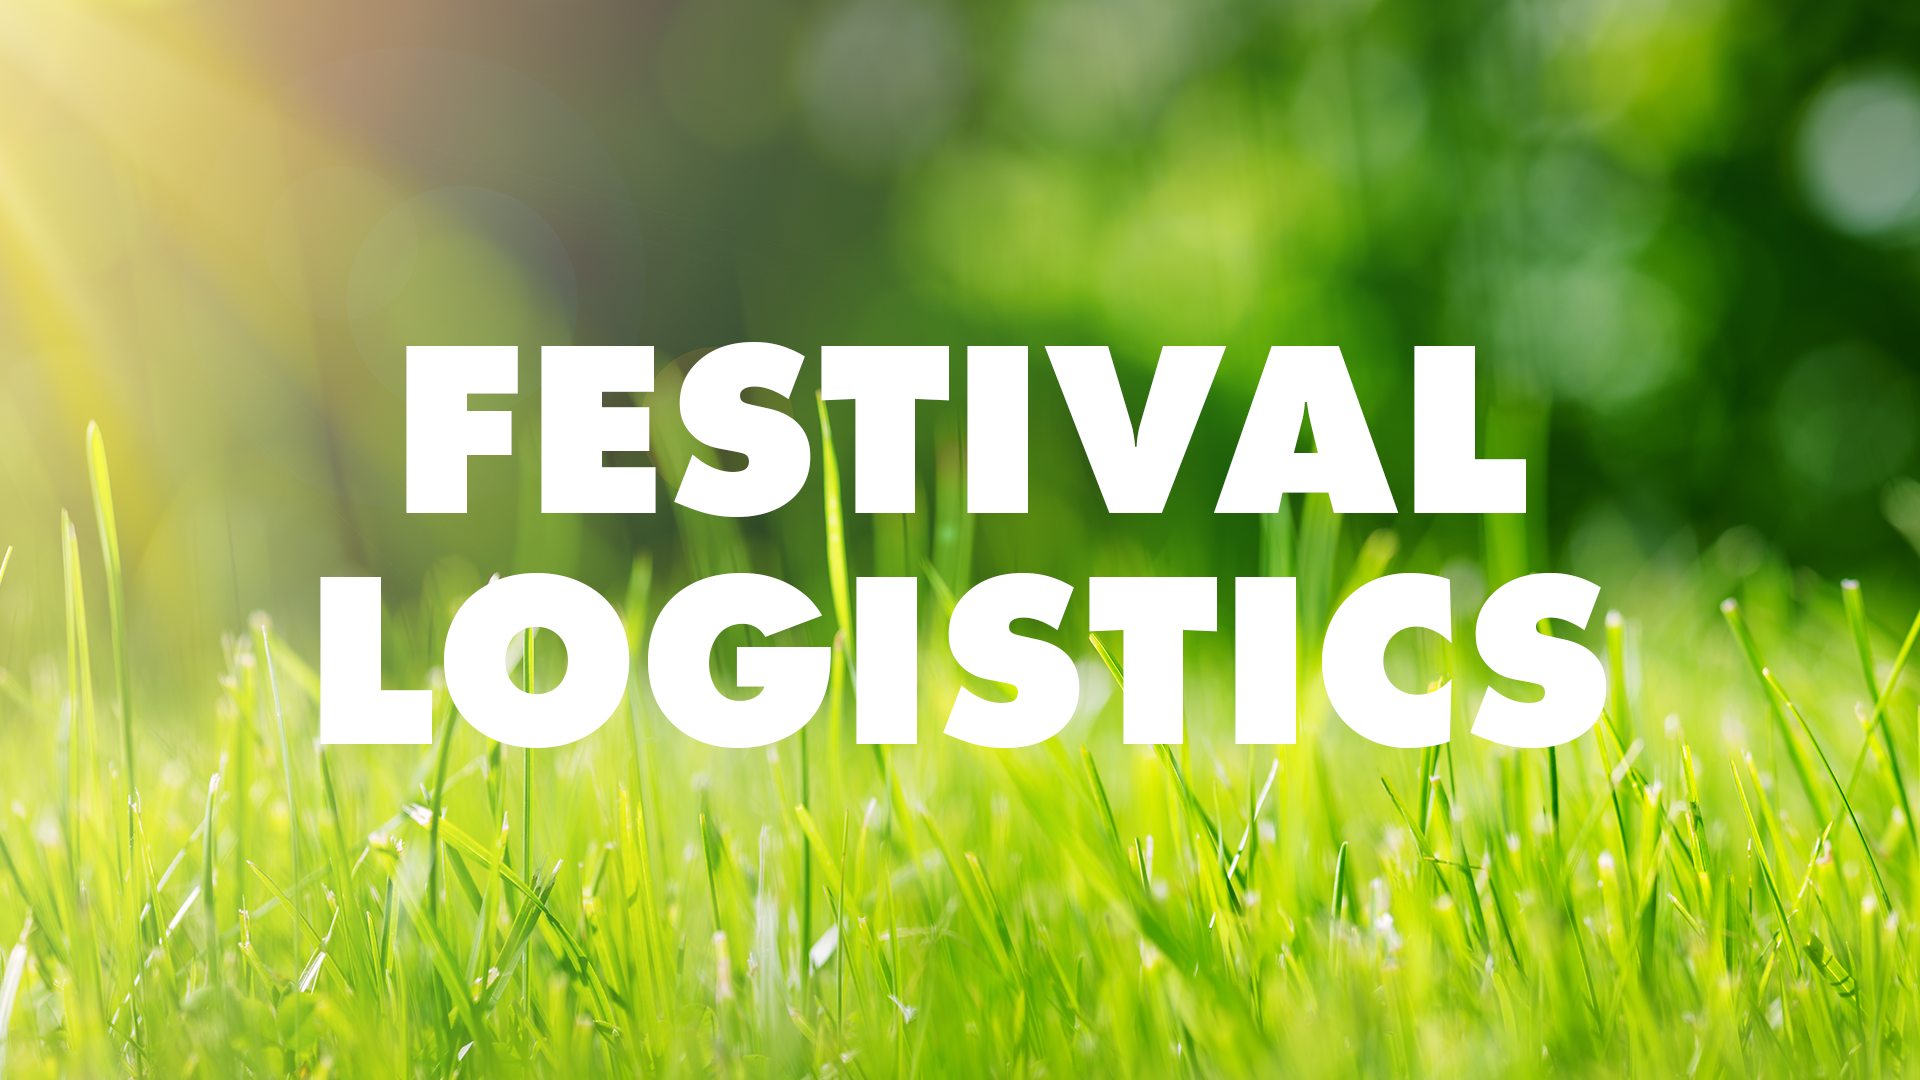 Festival Logistics Committee Meeting festival logistics